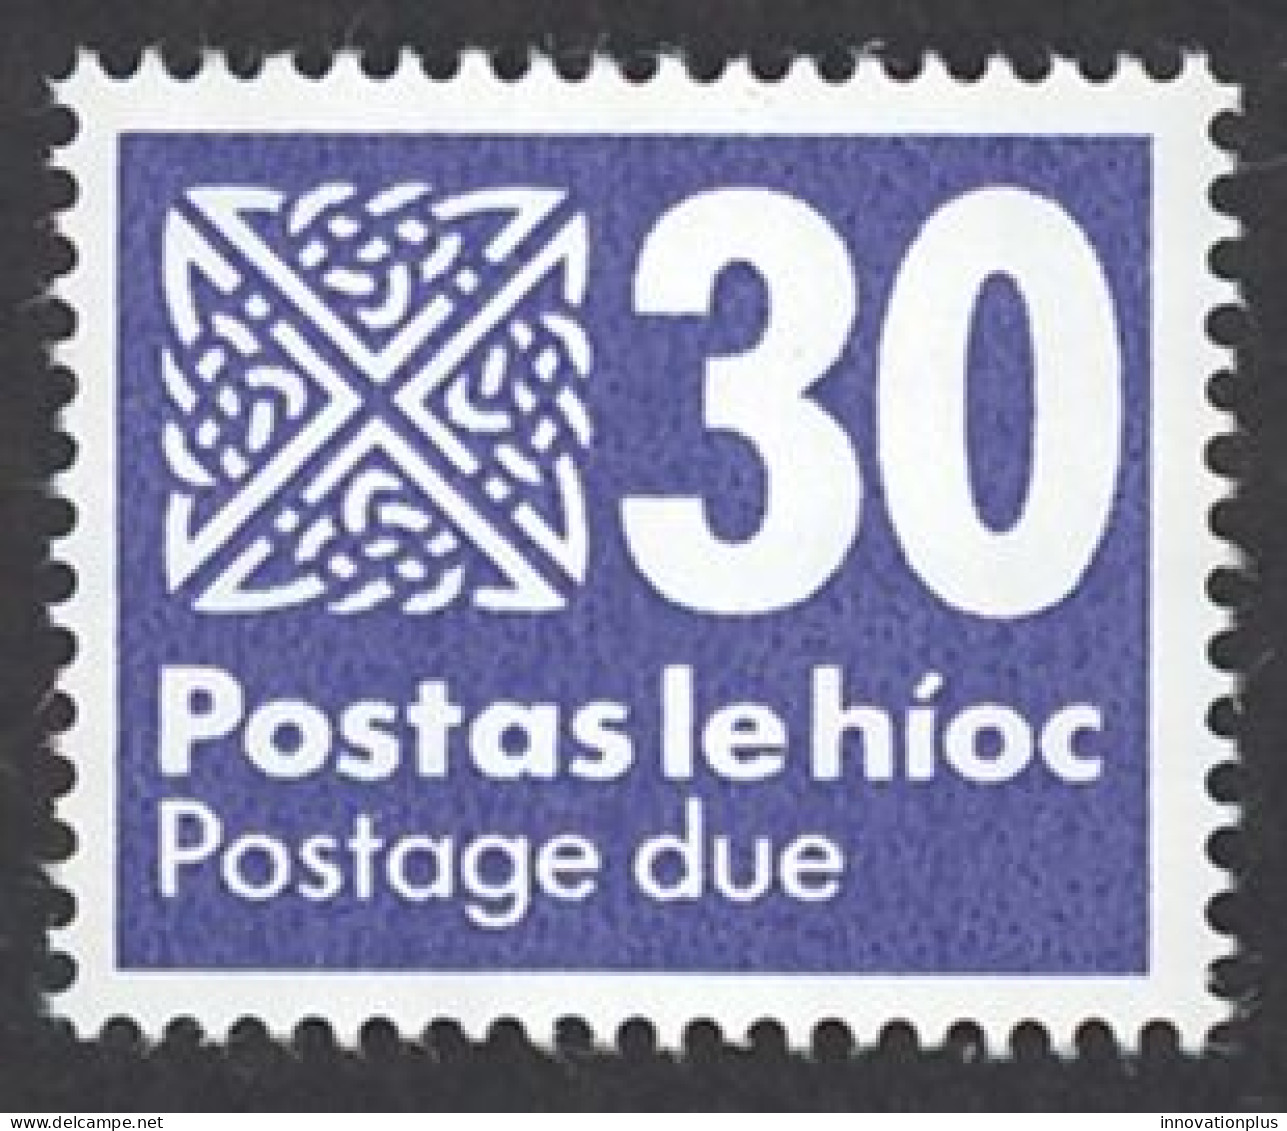 Ireland Sc# J35 MNH 1985 30p Postage Due - Segnatasse